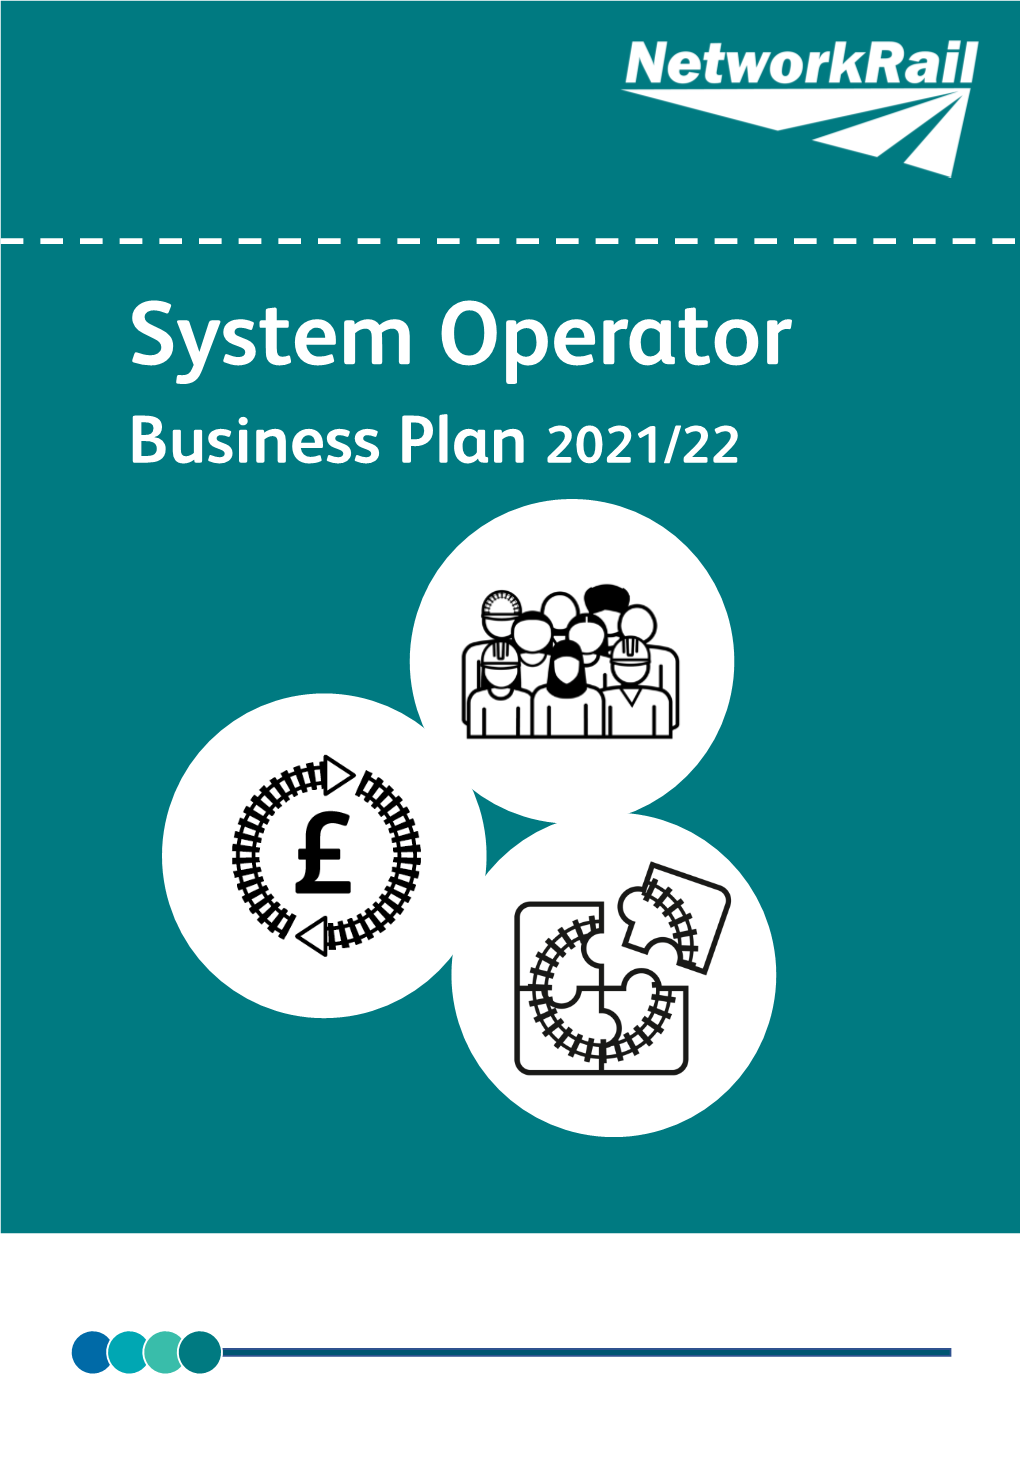 System Operator Strategic Plan